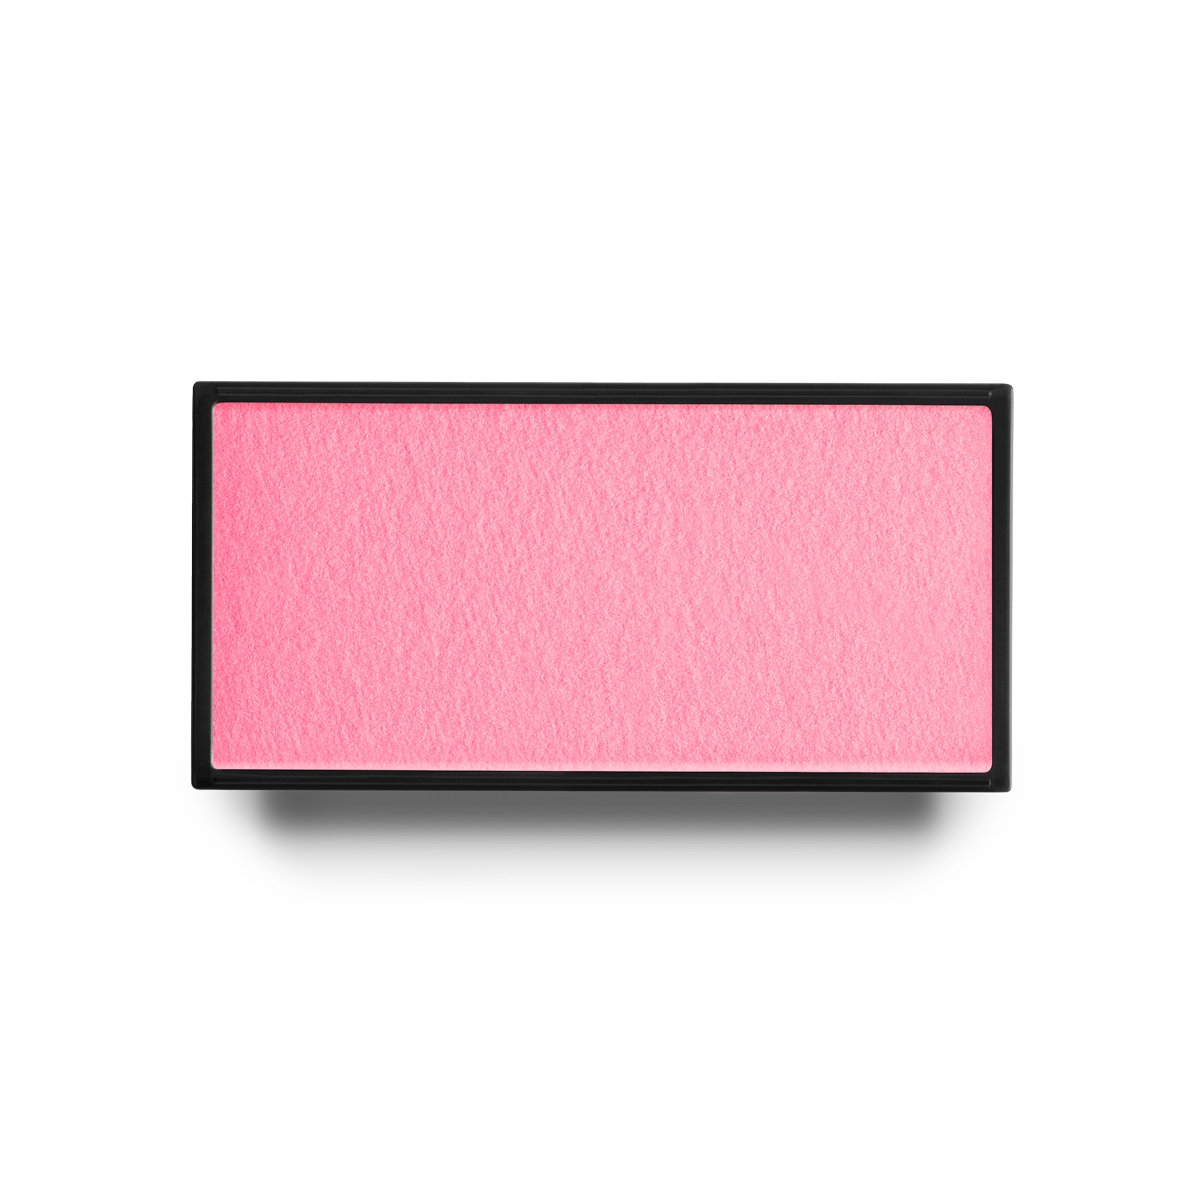 TU ME FAIS ROUGIR - SATIN WARM BRIGHT PINK - satin finish powder blush in warm bright pink shade